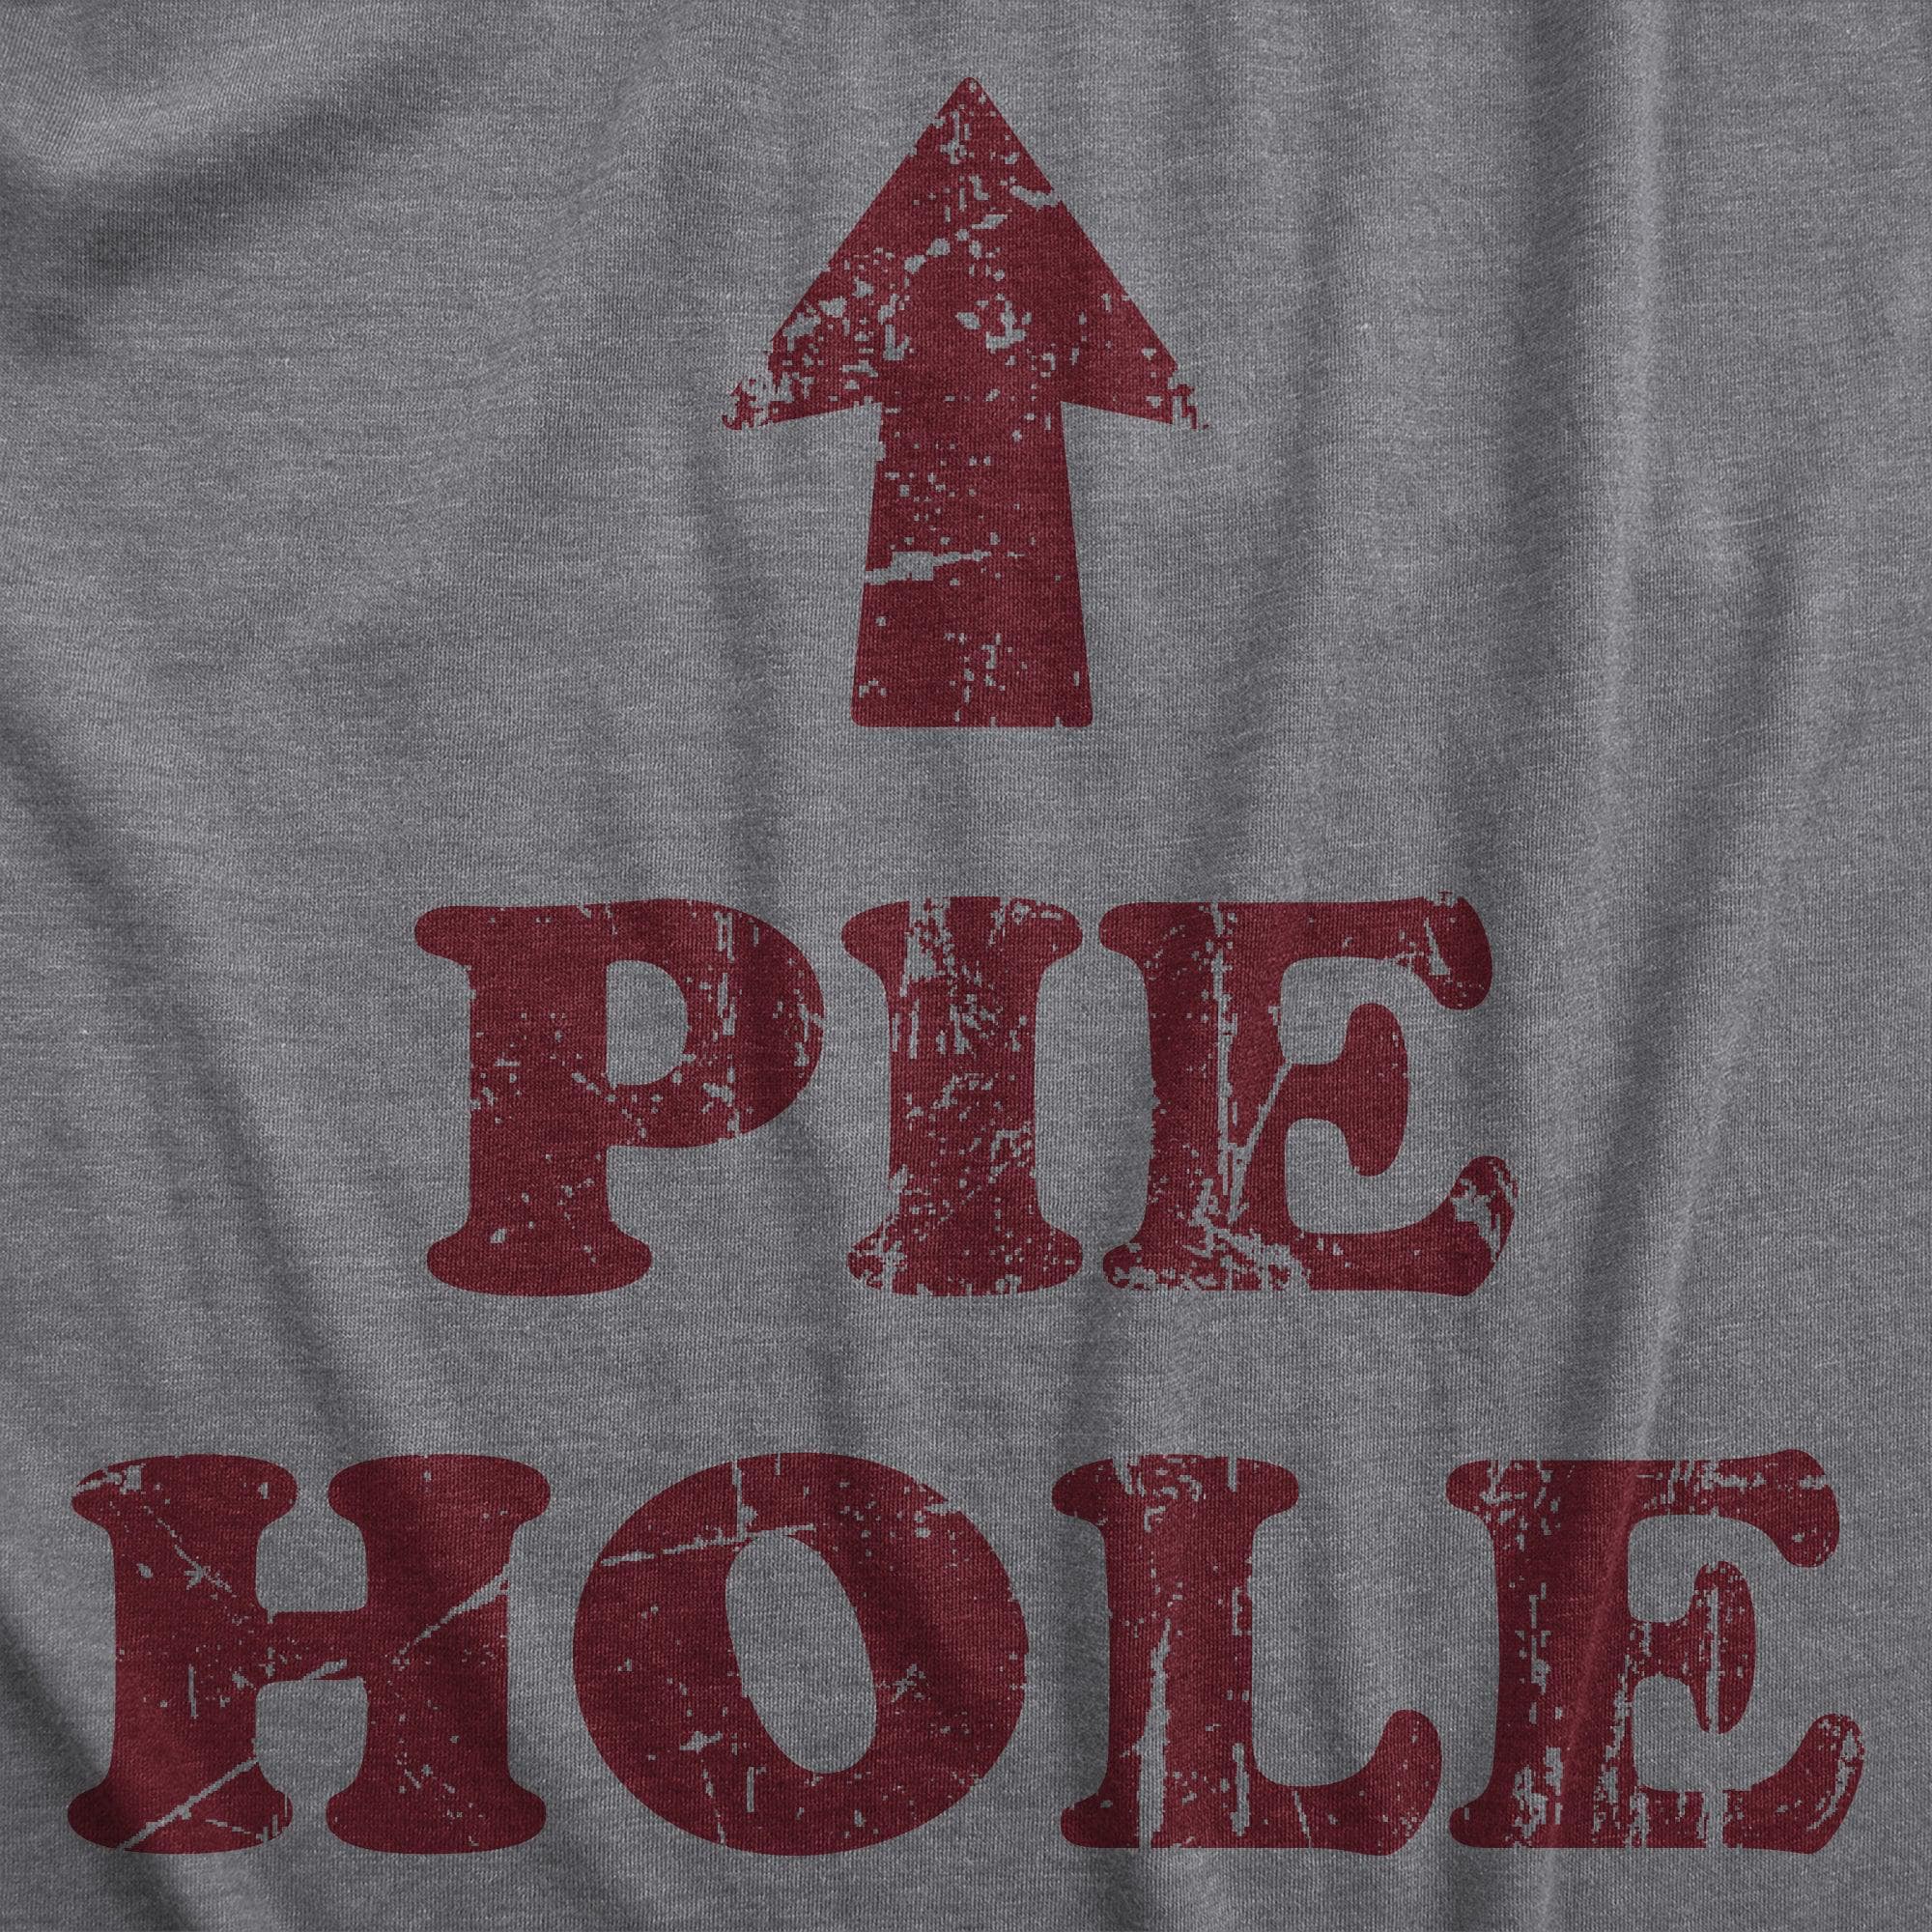 Pie Hole Men's Tshirt  -  Crazy Dog T-Shirts